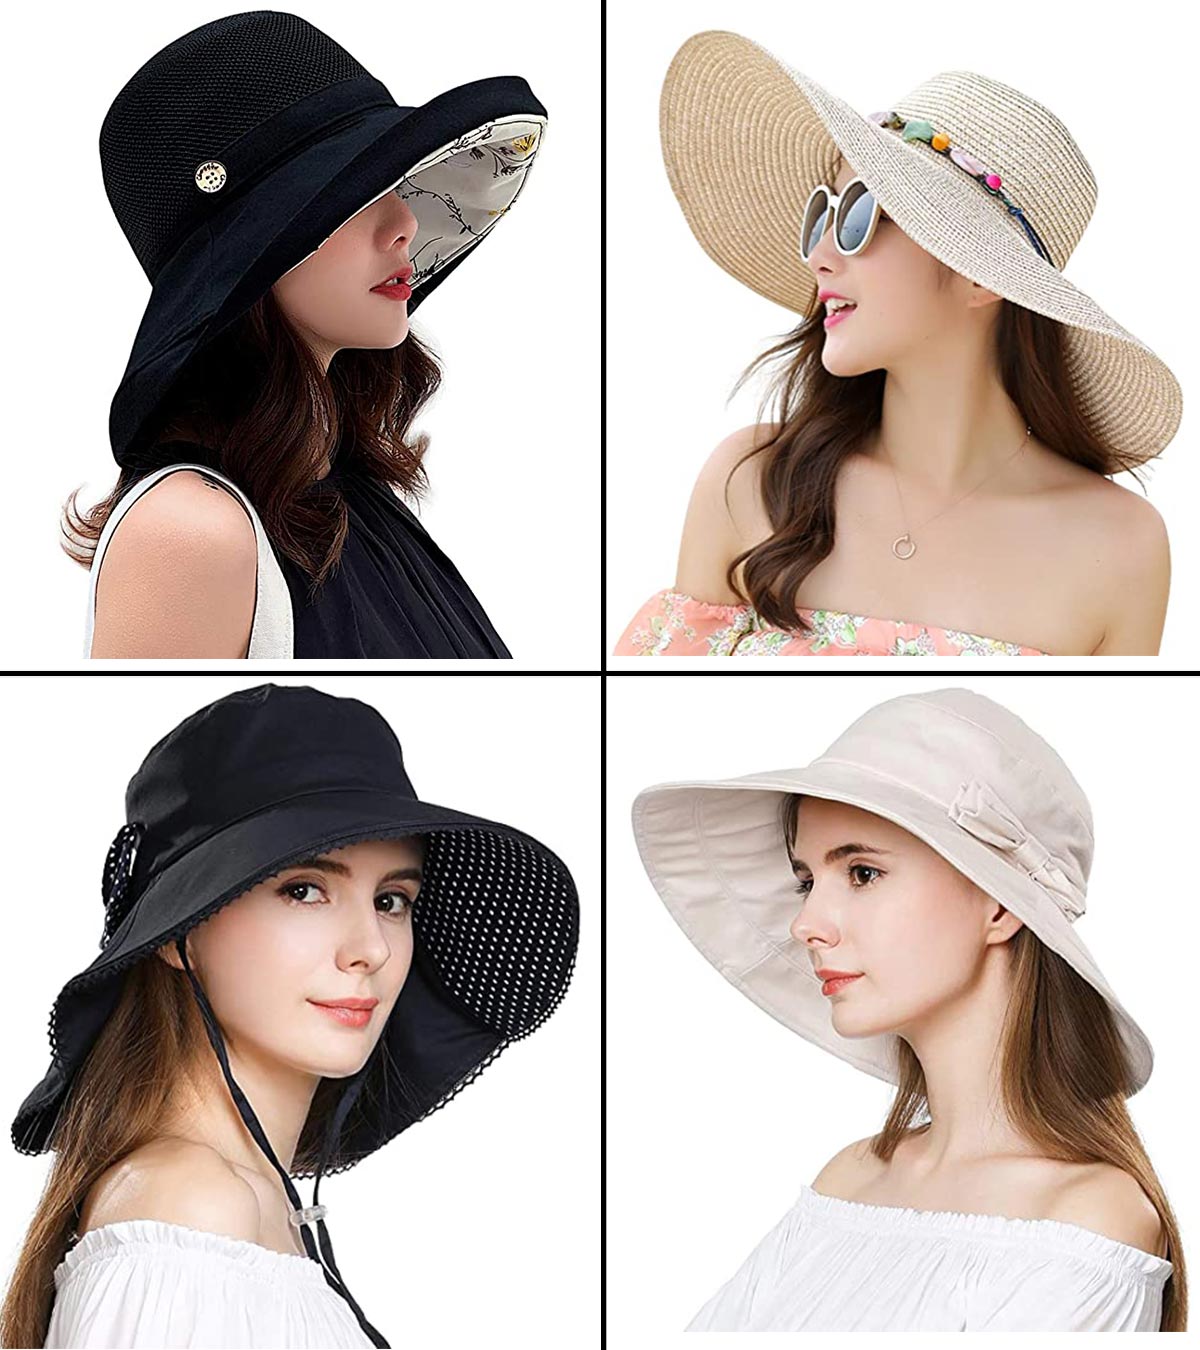 High Quality Hats 100% Cotton Washed Versatile Outdoor Sun Bucket Cap  Summer for Man Women Fishing Caps - China Fishing Cap and High Quality  price